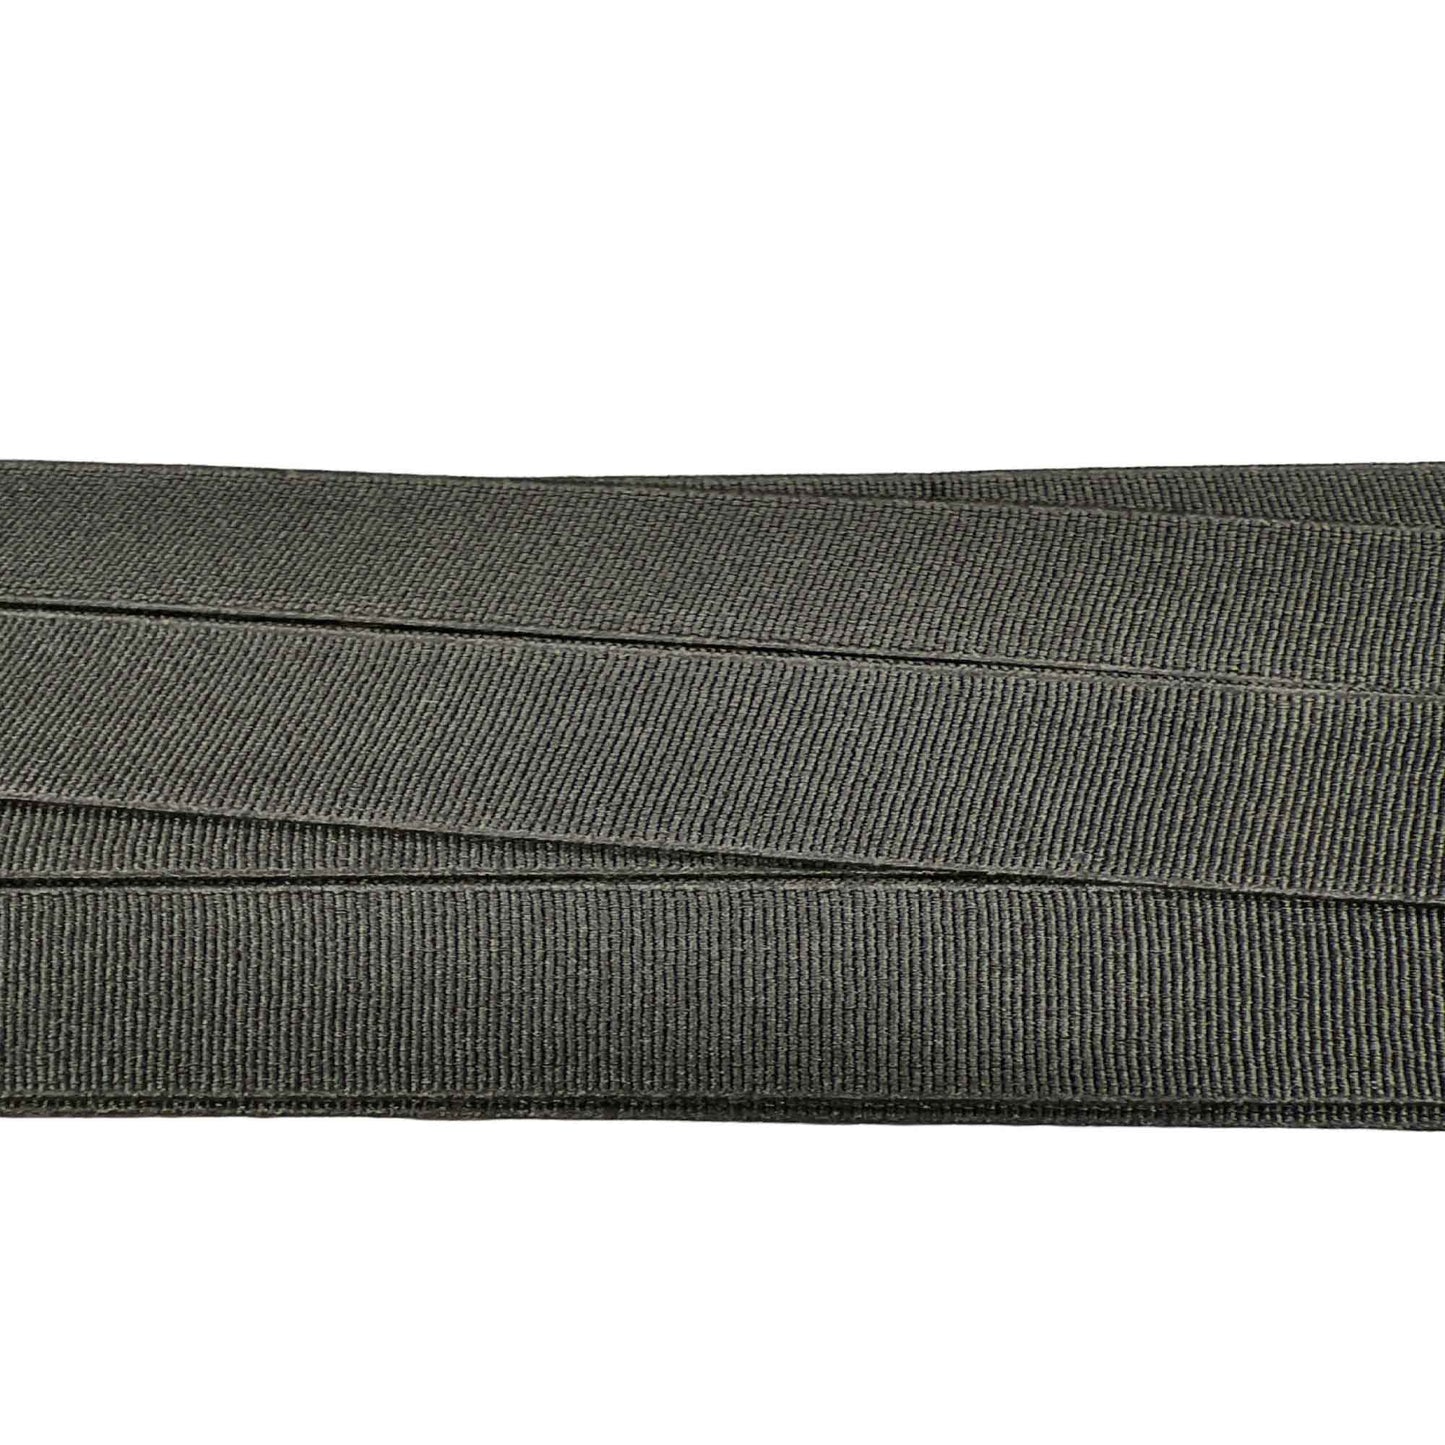 20mm Black High Density Elastic Roll 40m - Birch Sewing Fabric Polyester Craft